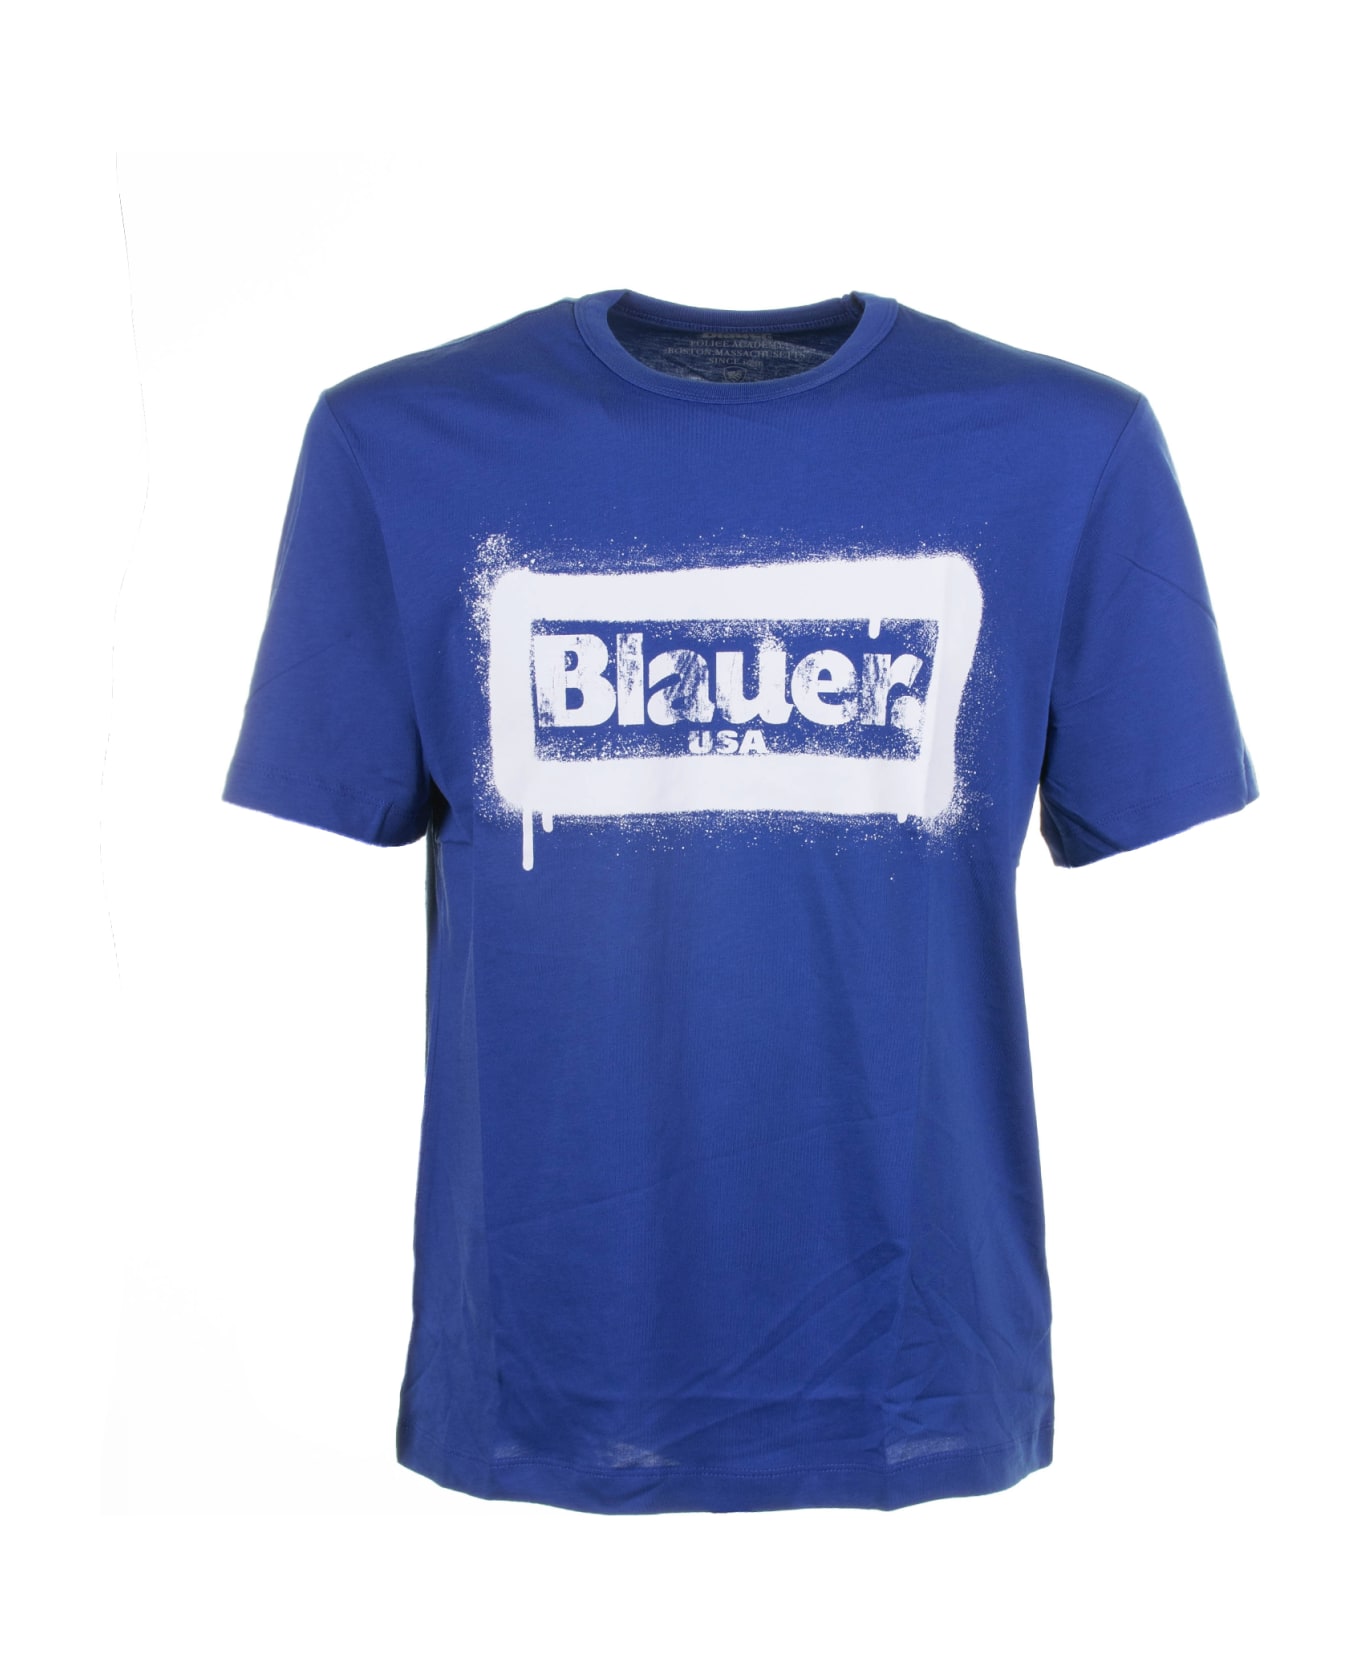 Blauer Blue Crew Neck T-shirt In Cotton - MOLTO BLU シャツ